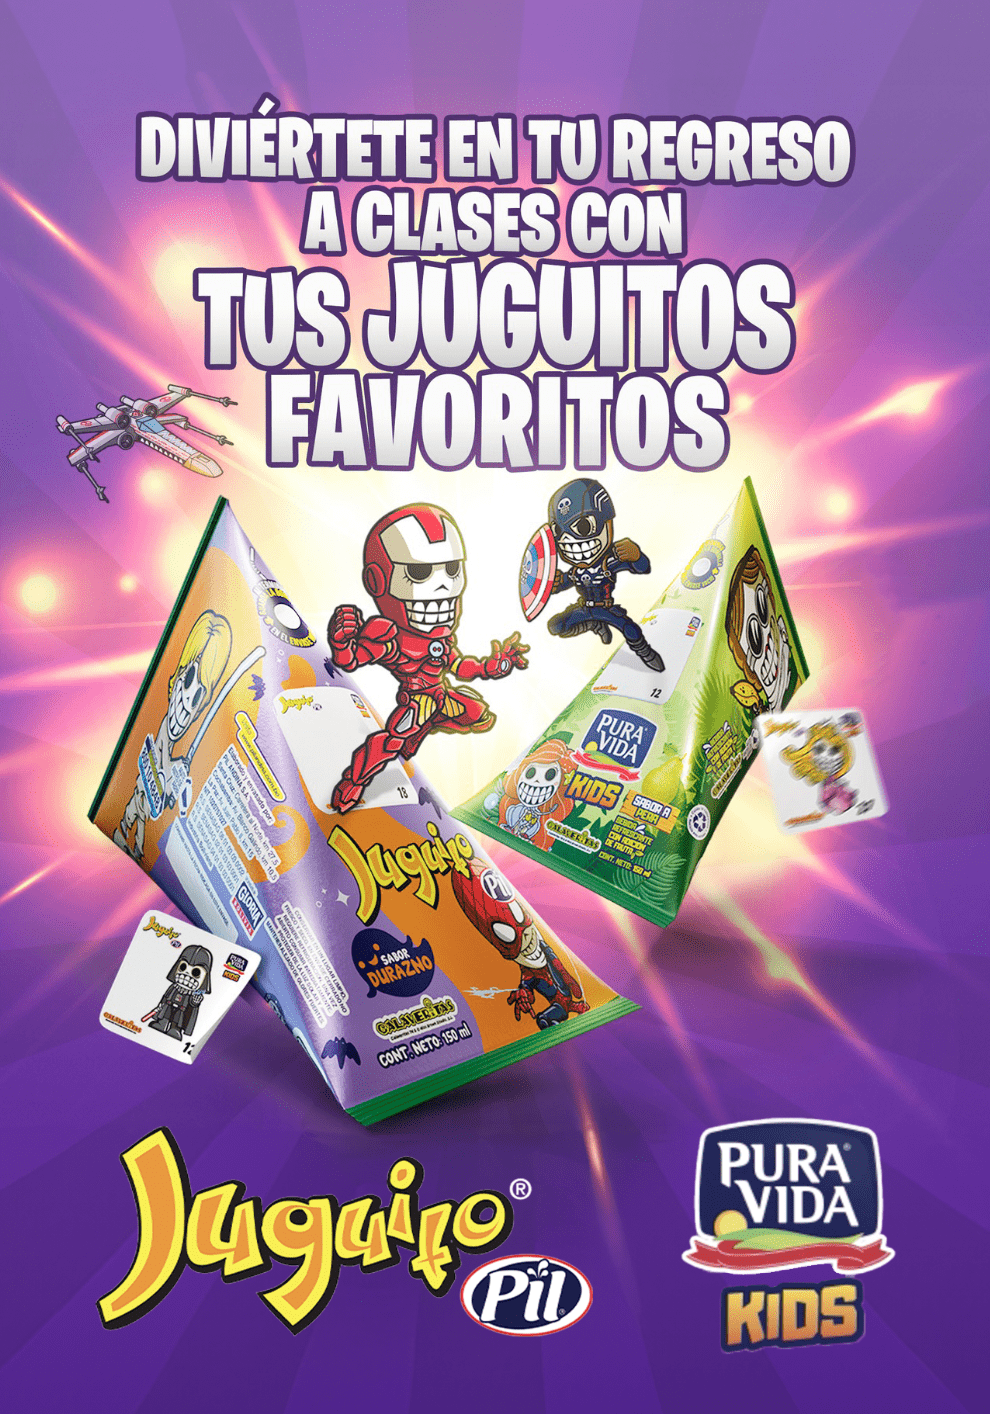 Juguito - PVKids (Calaveritas)